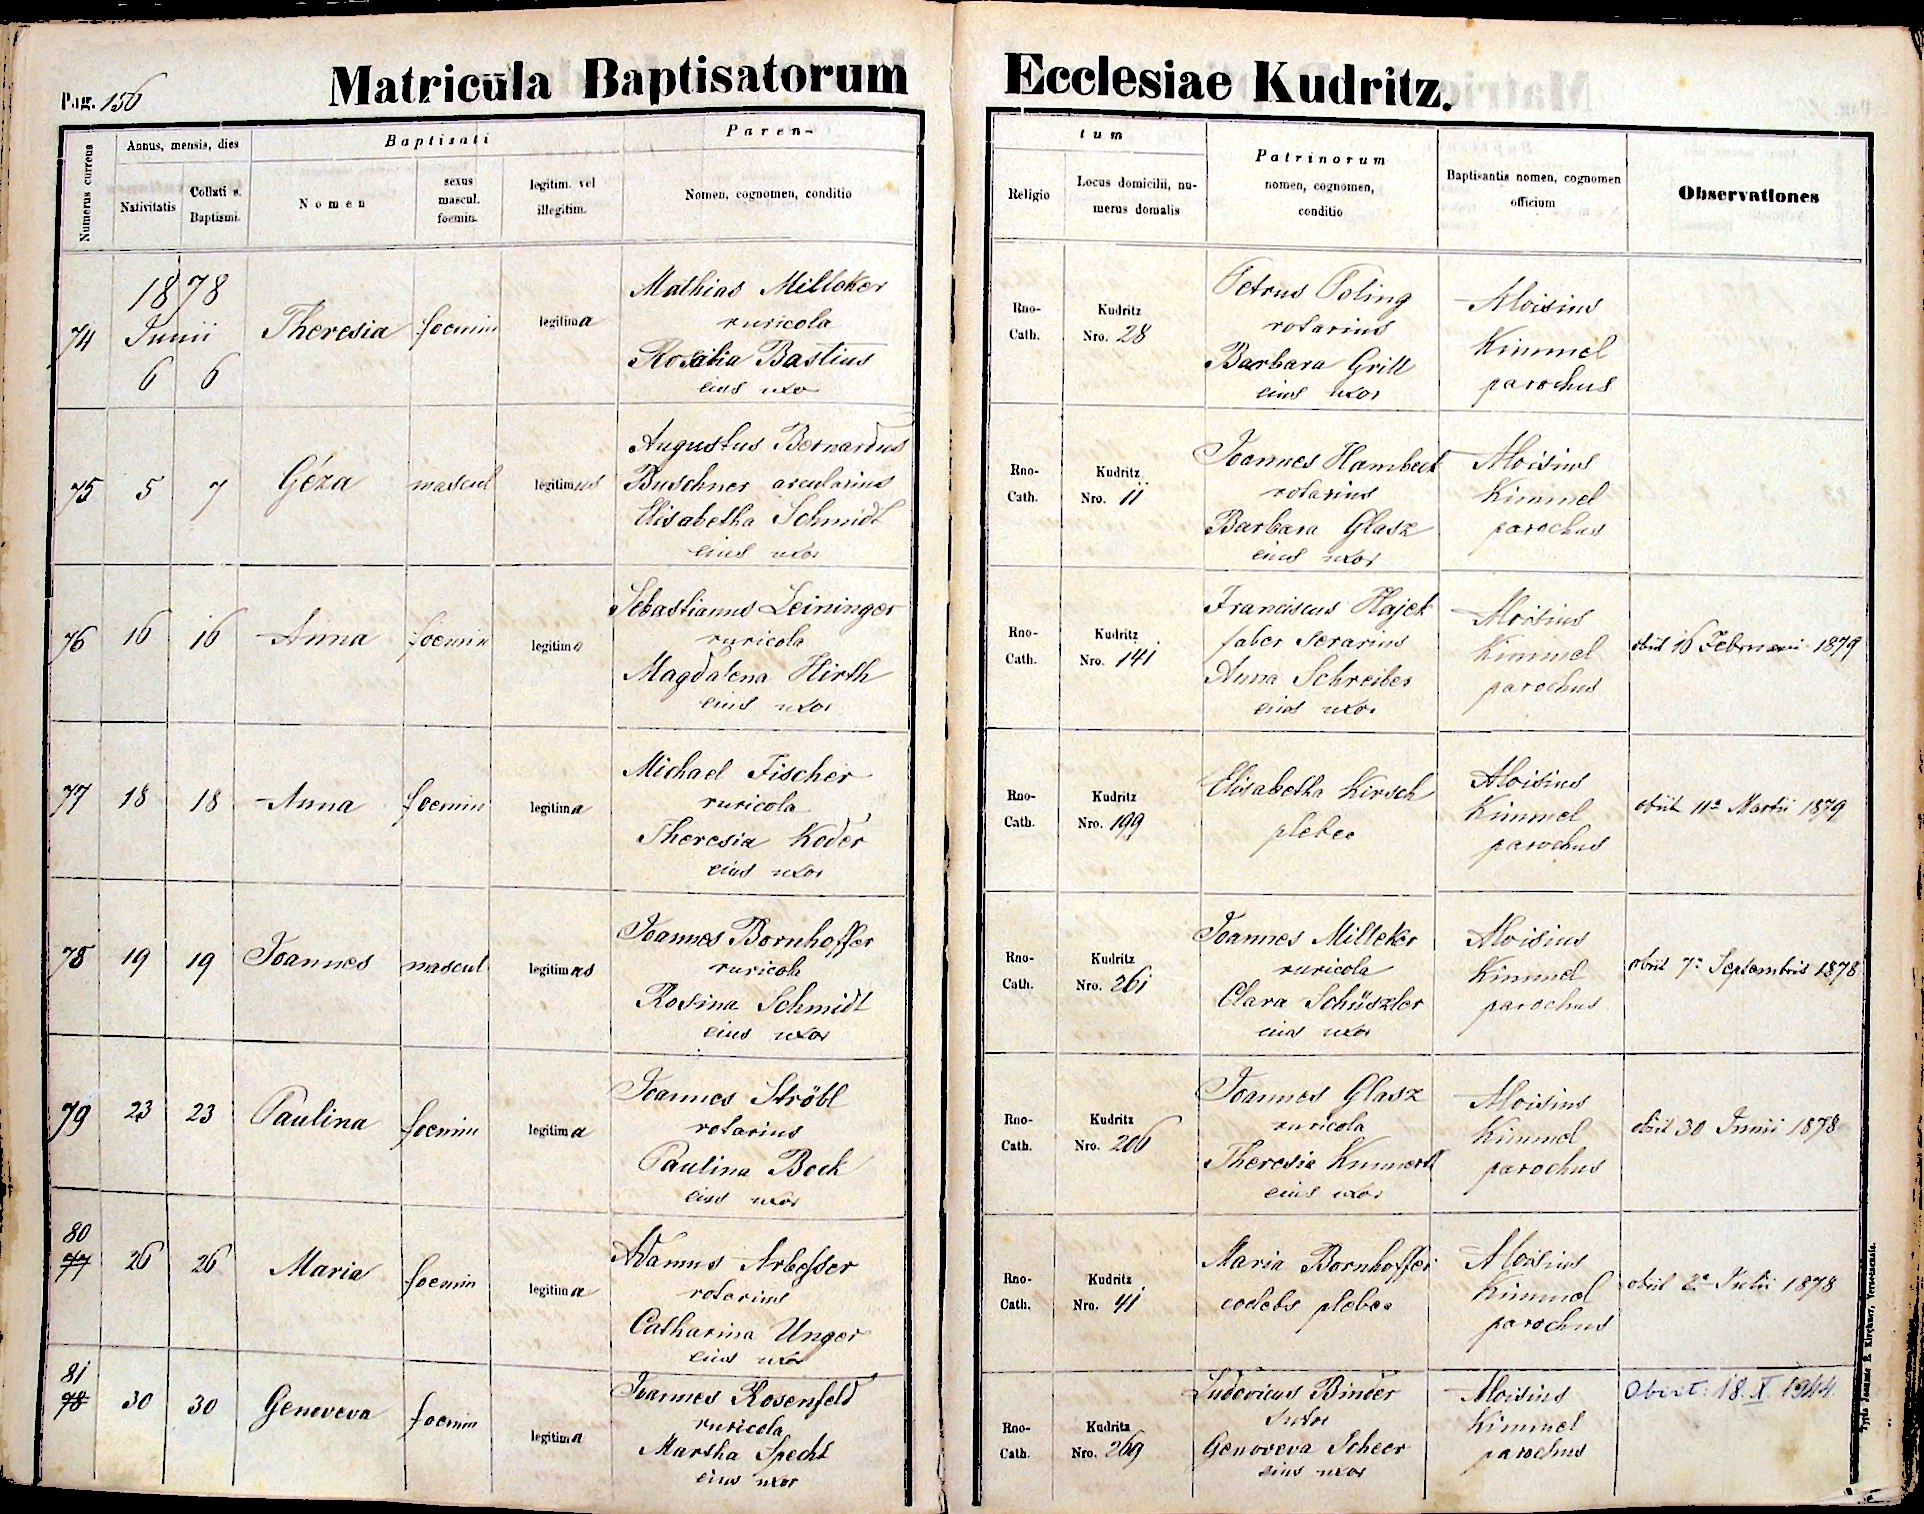 images/church_records/BIRTHS/1884-1899B/1894/156